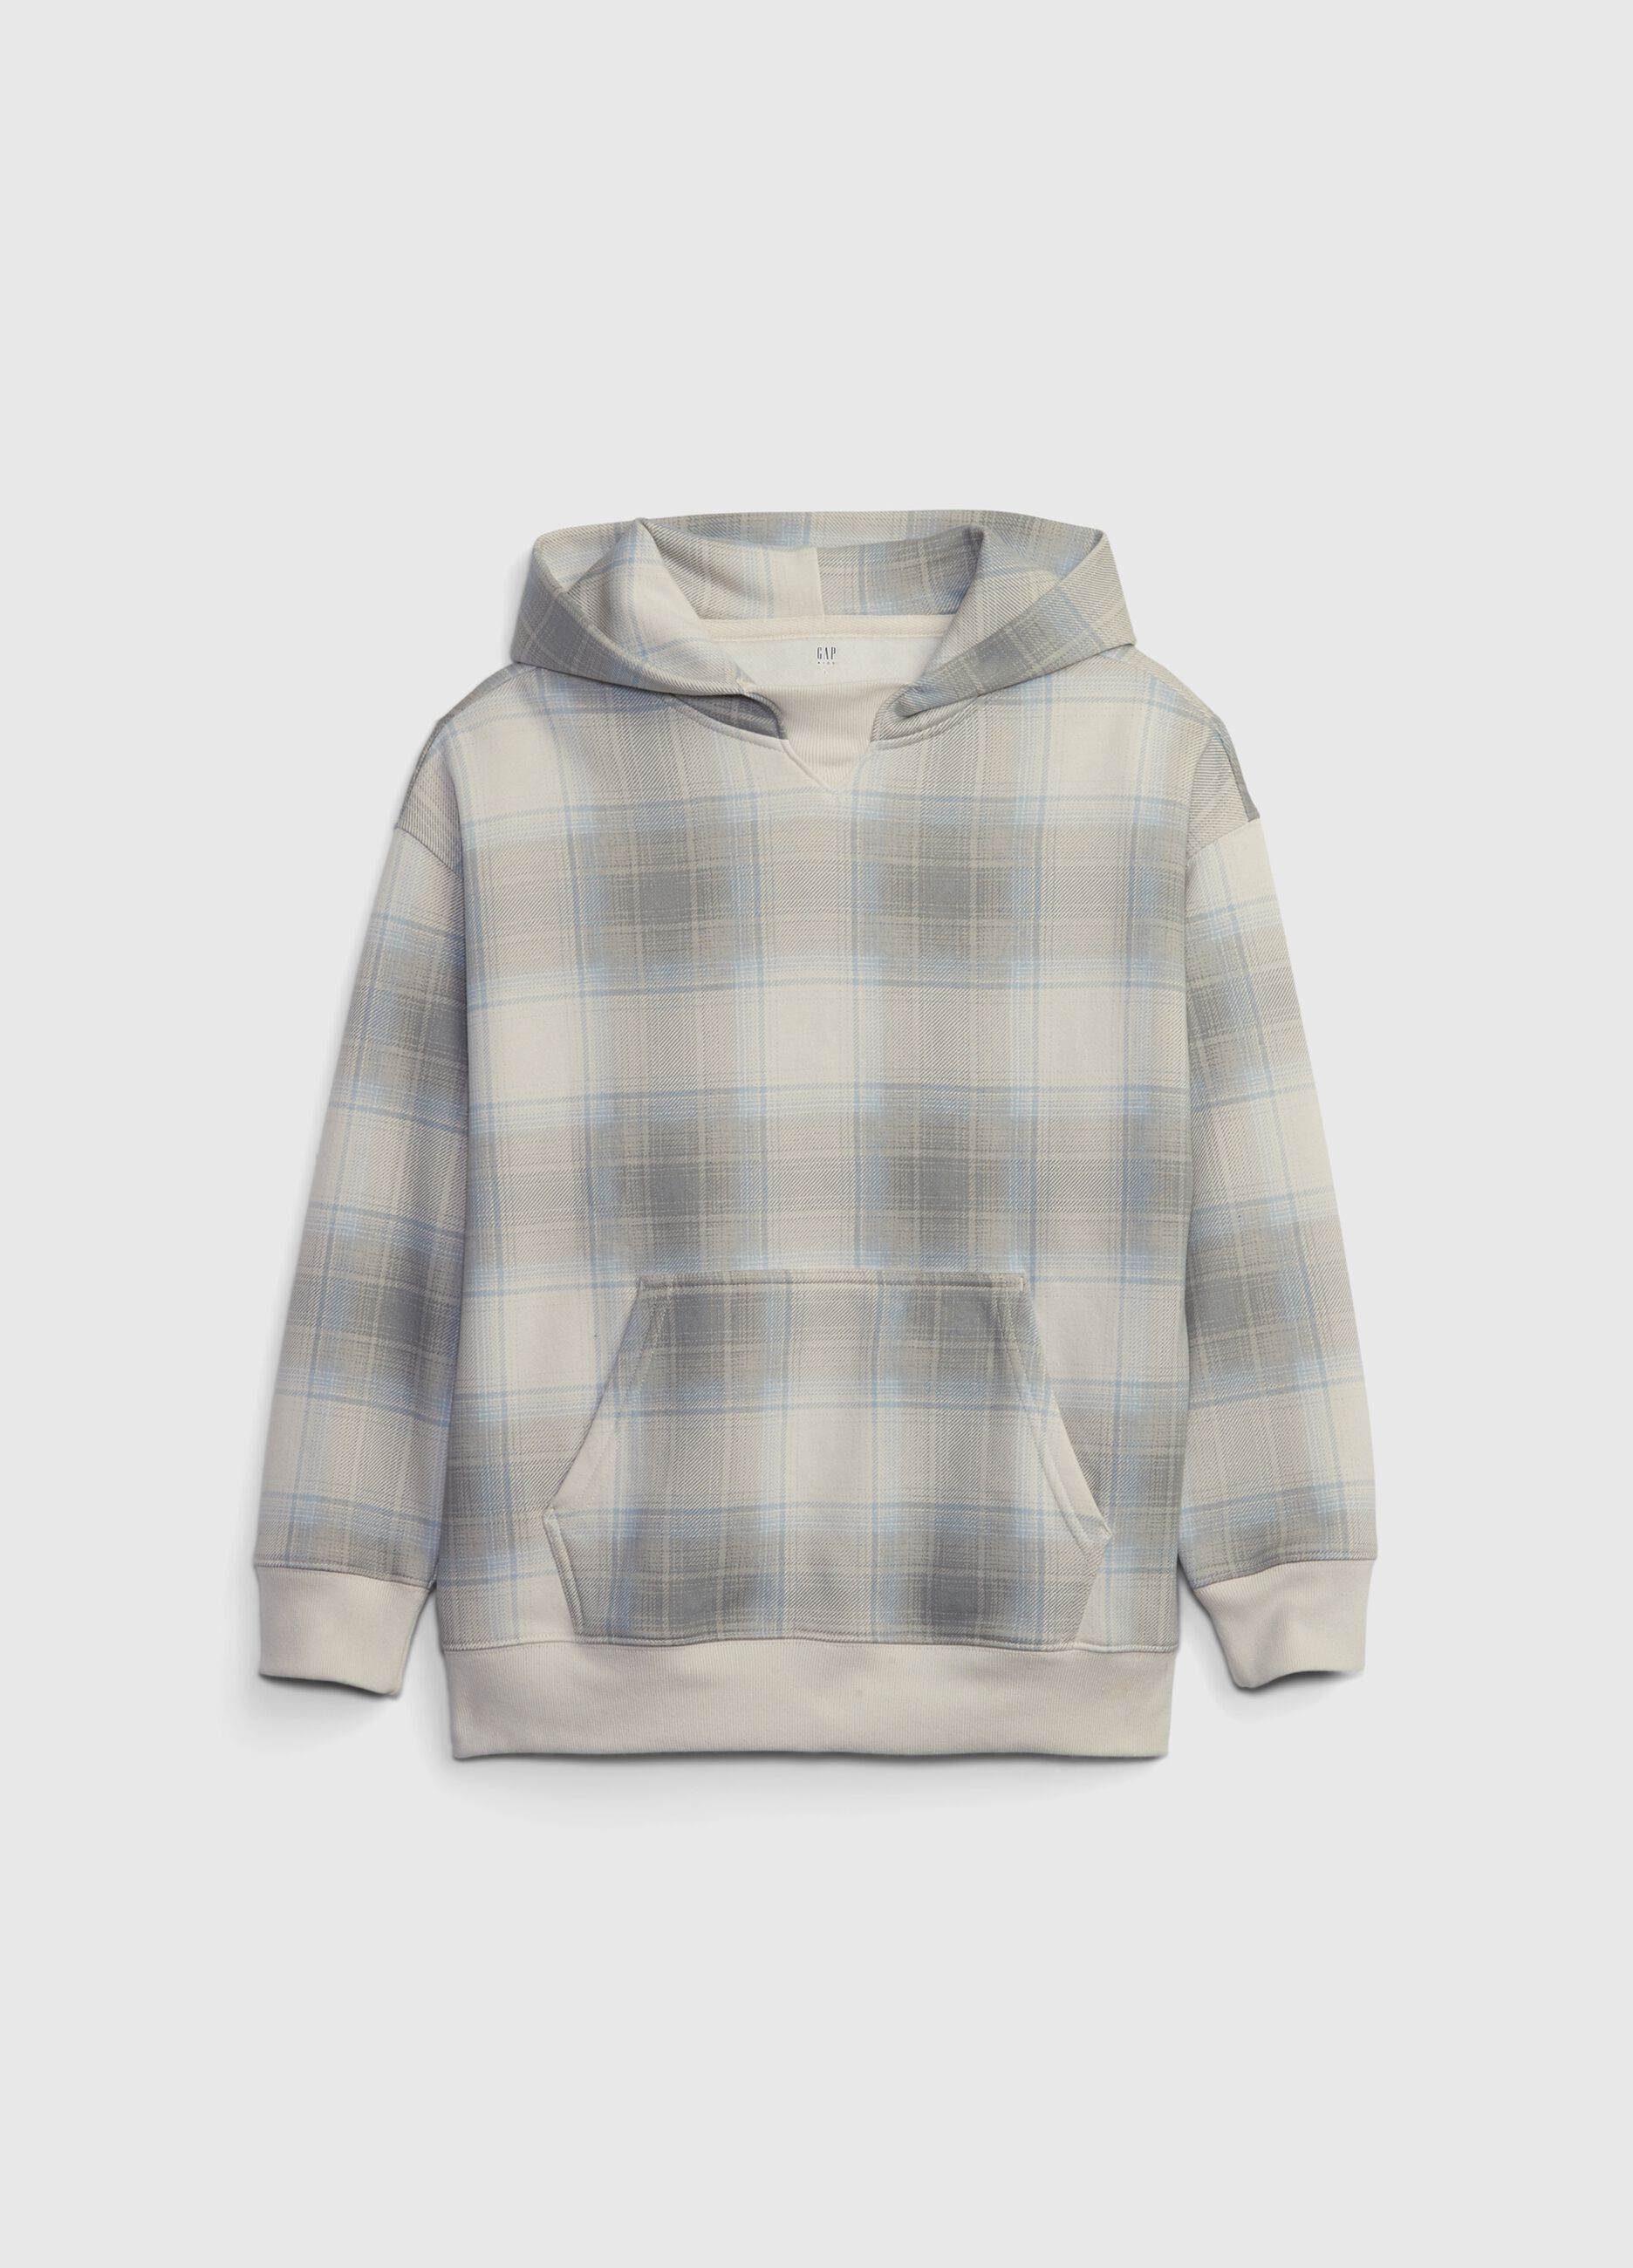 Sweatshirt with hood and plaid pattern